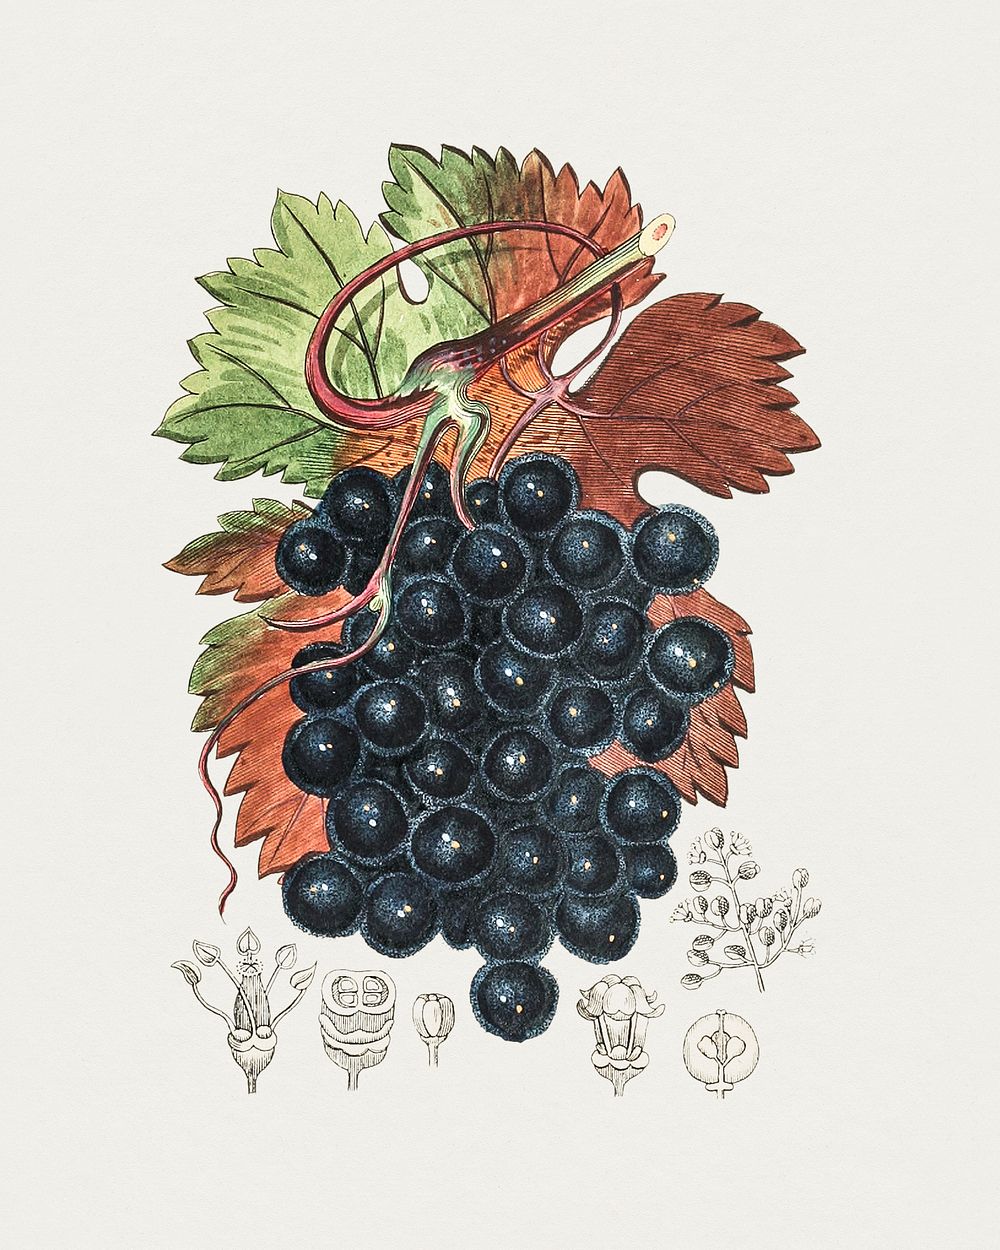 Hand drawn grape vine. Original from Biodiversity Heritage Library. Digitally enhanced by rawpixel.